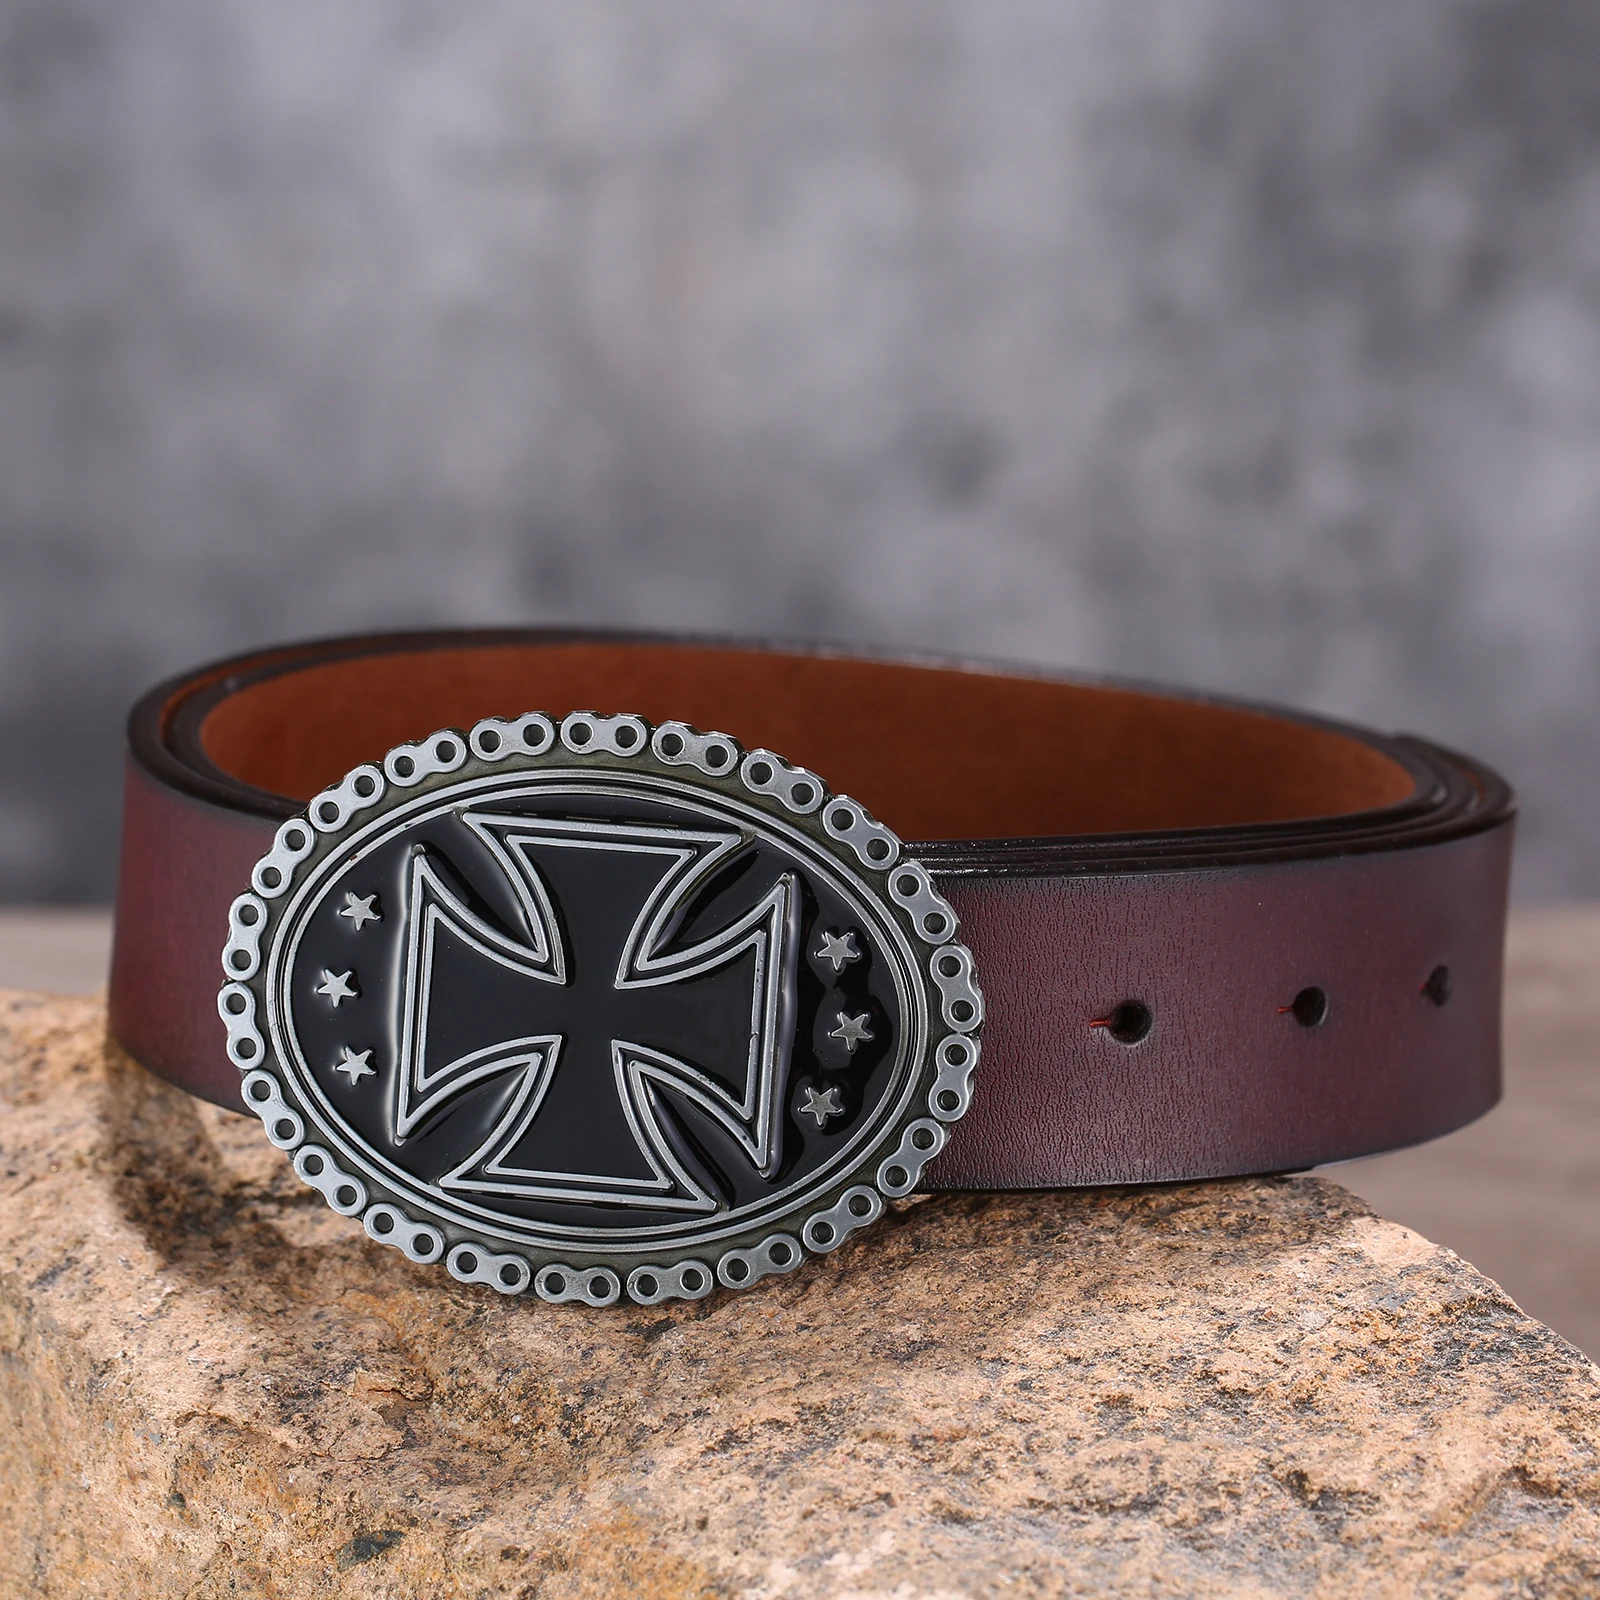 Western cowboy zinc combined religious belief cross prayer attitude buckle with leather belt men's all-match leather belt